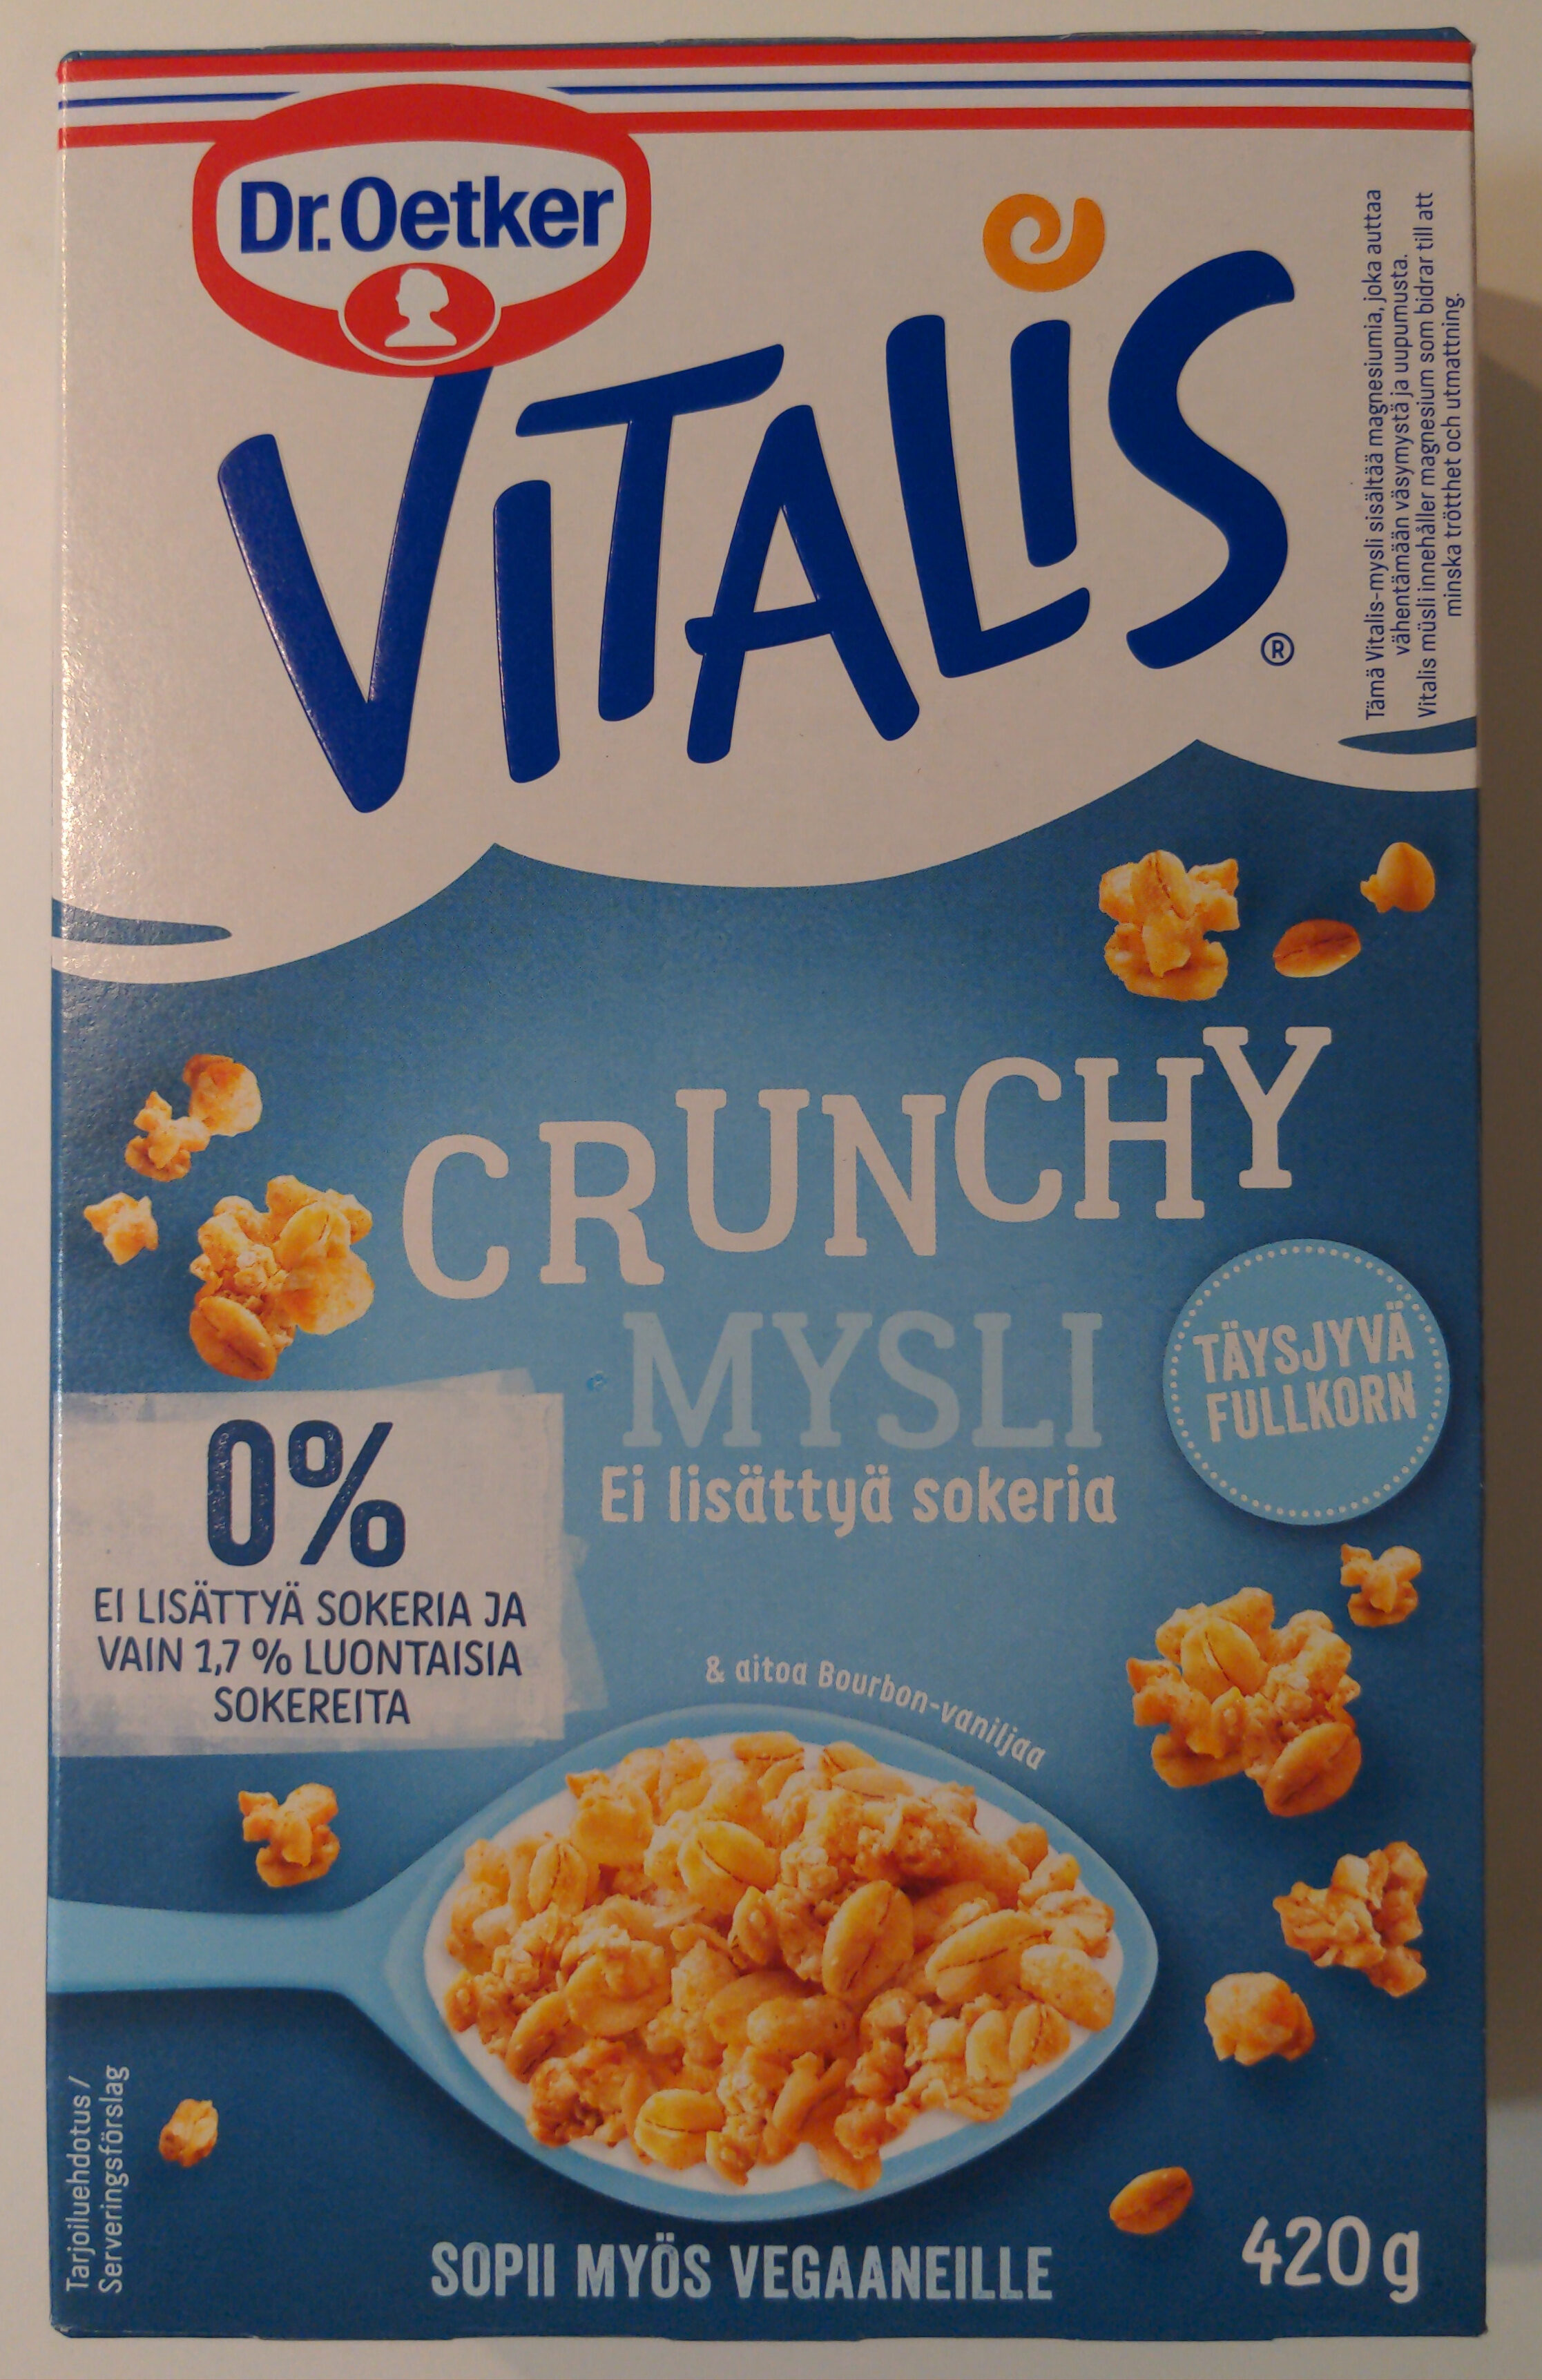 Vitalis crunchy mysli - Produkt - fi